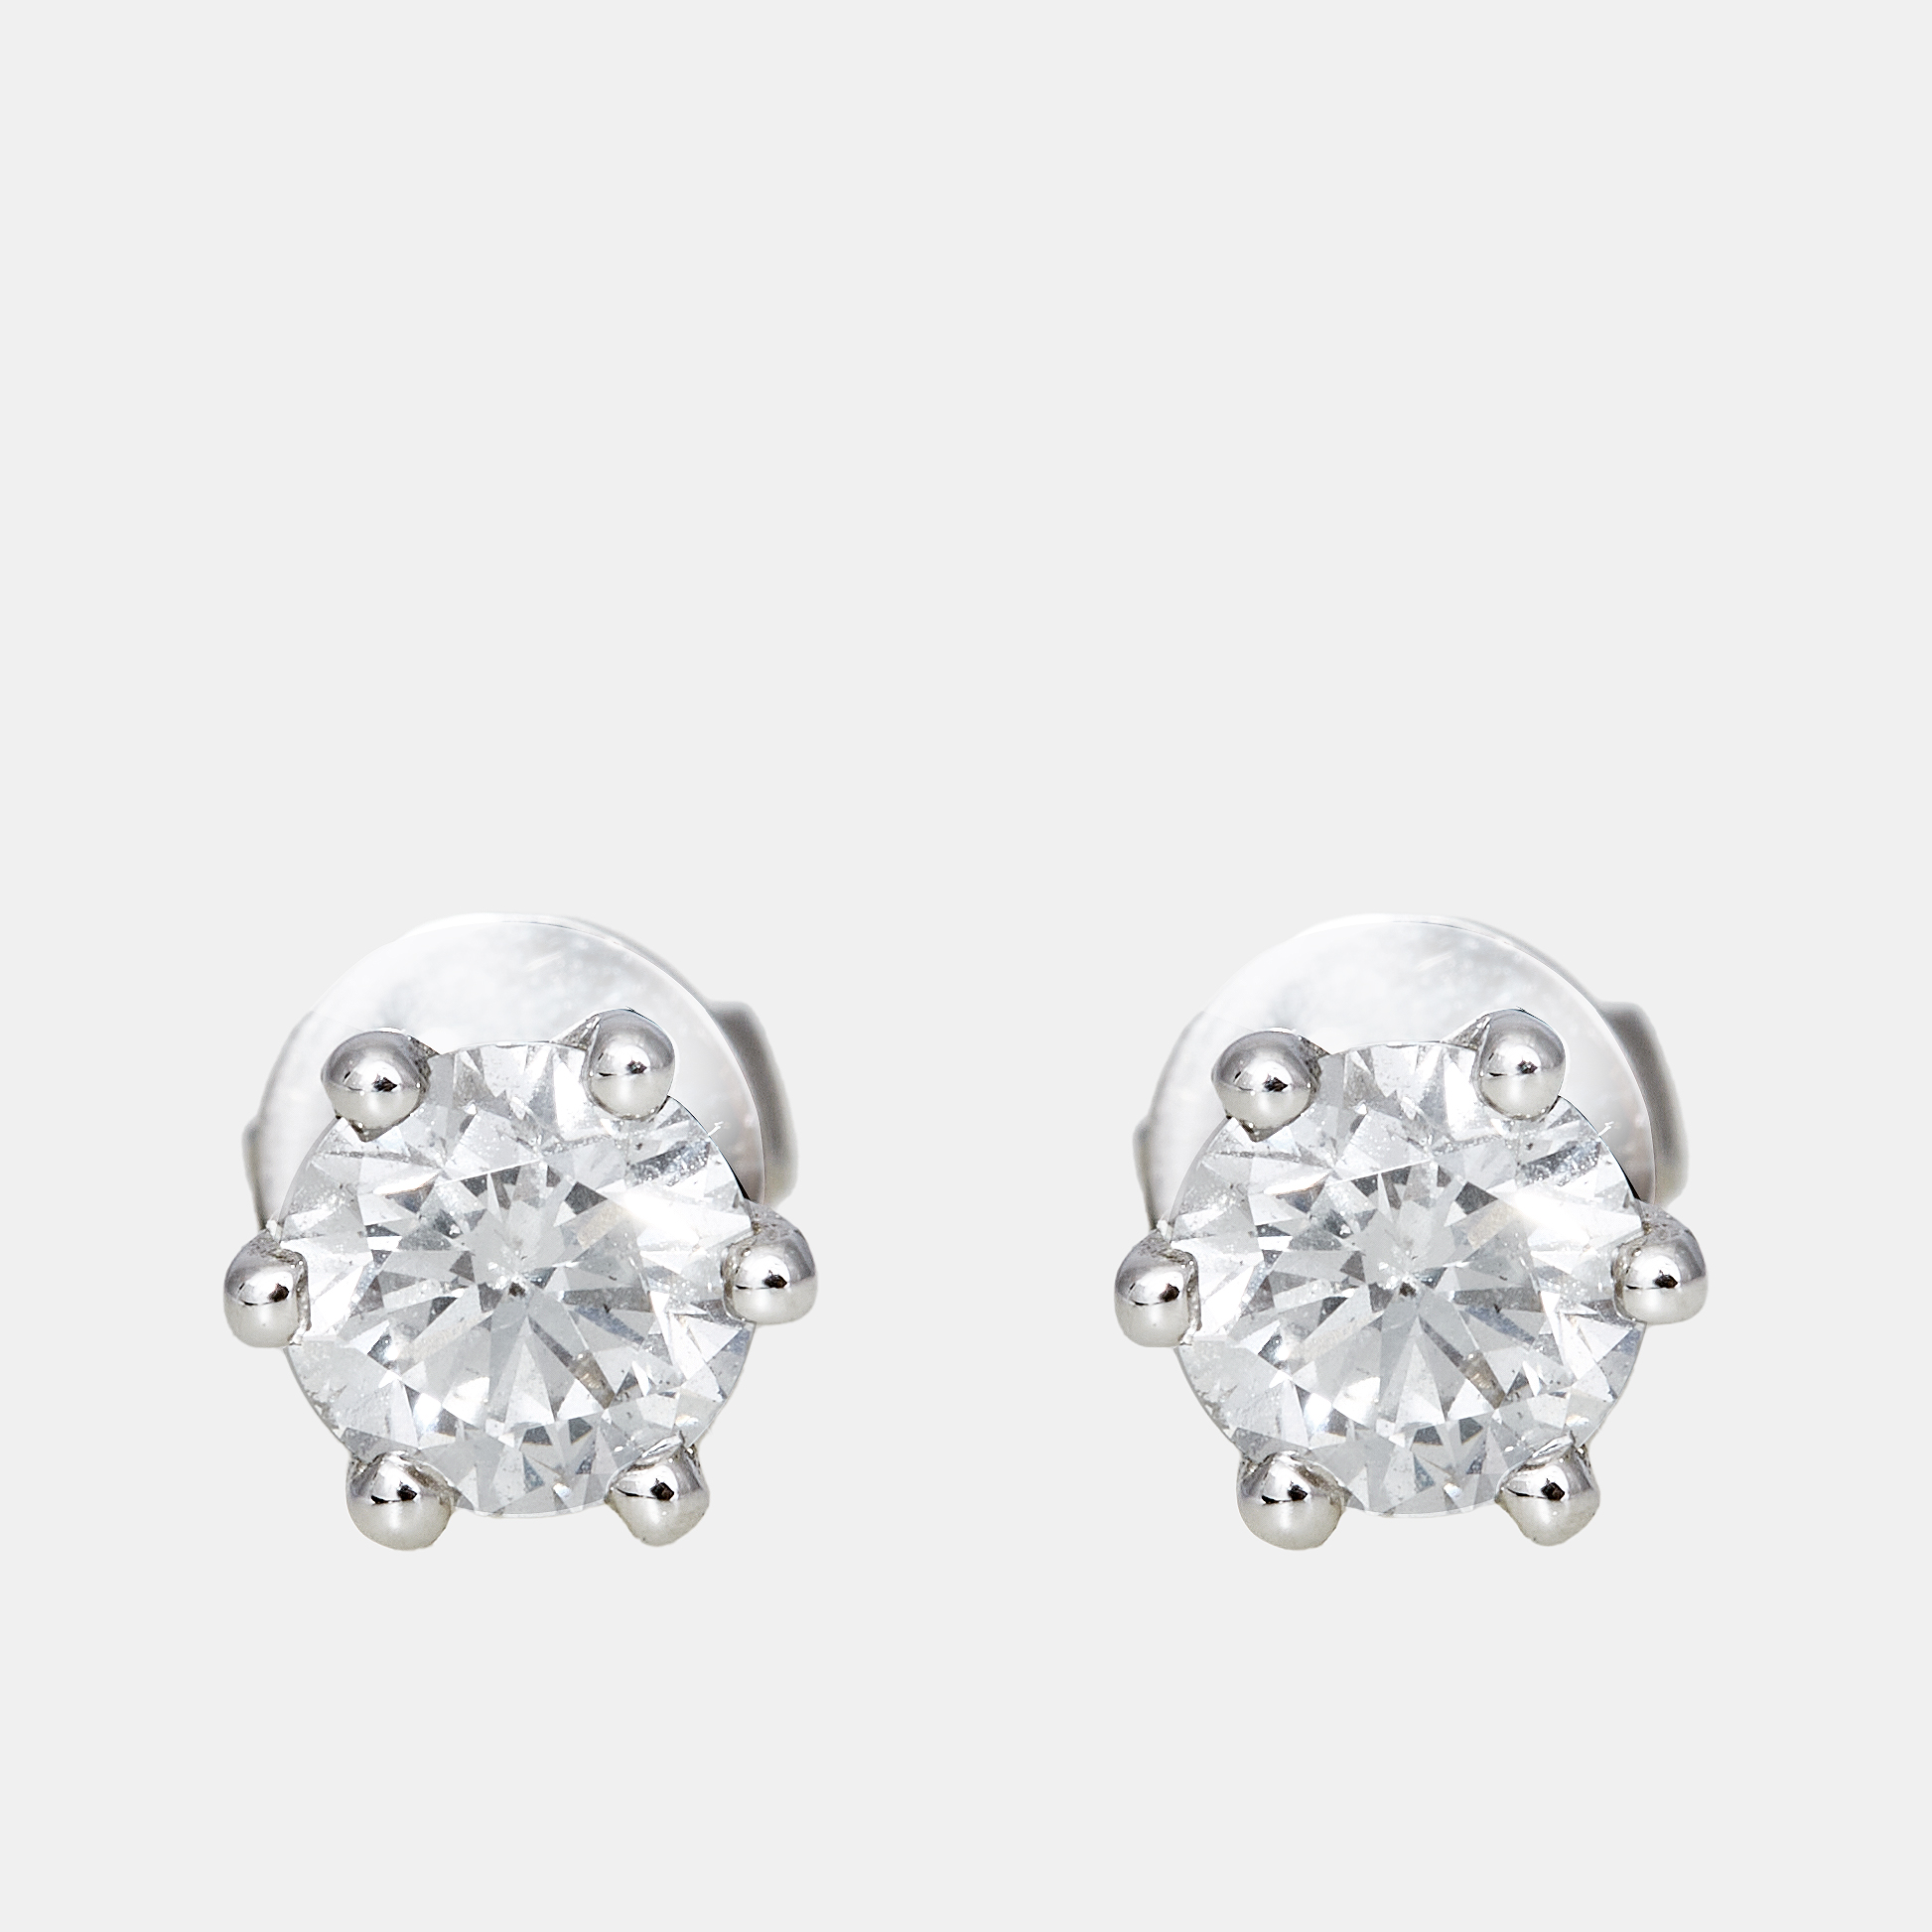 The diamond edit 18k white gold diamond 0.82 ct earrings